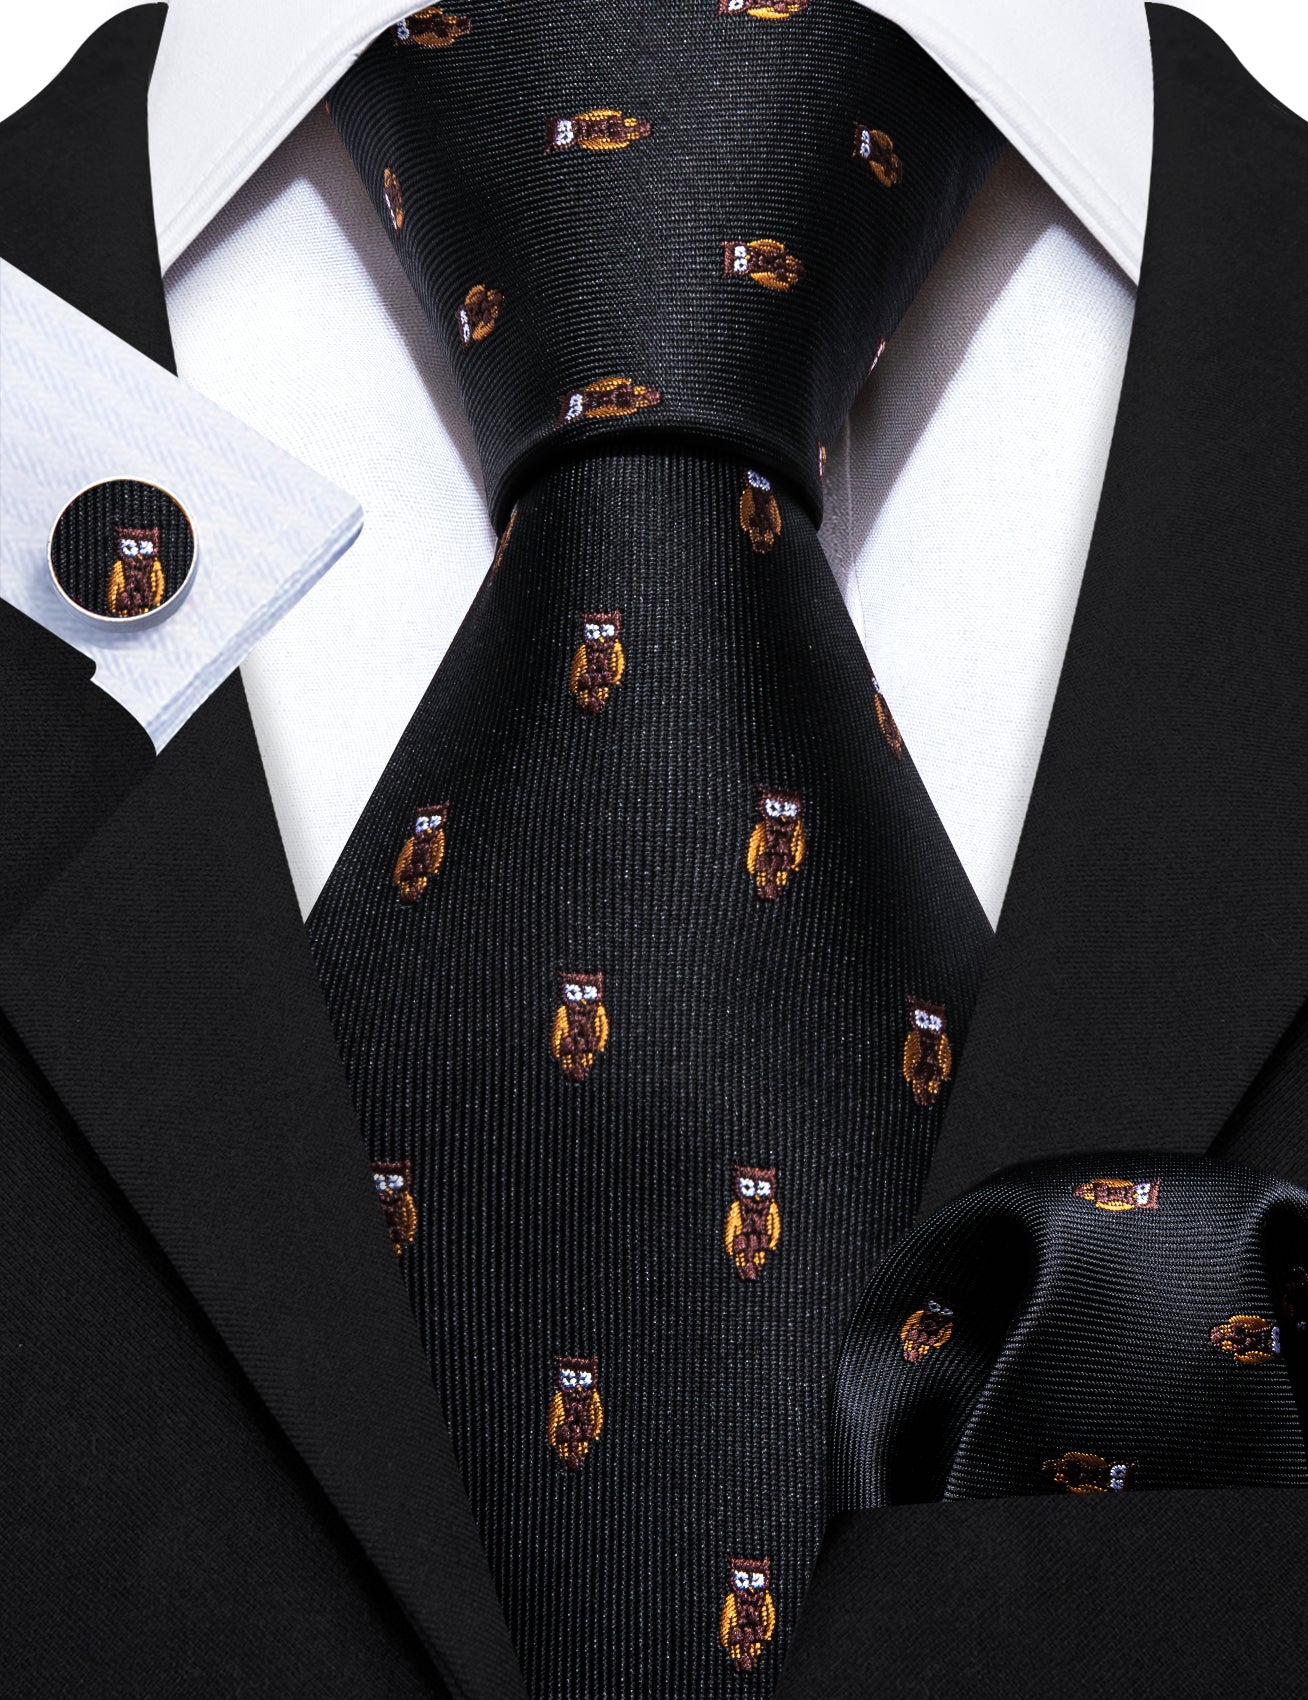 Barry.wang Black Tie Brown Owl Print Silk Tie Handkerchief Cufflinks Set